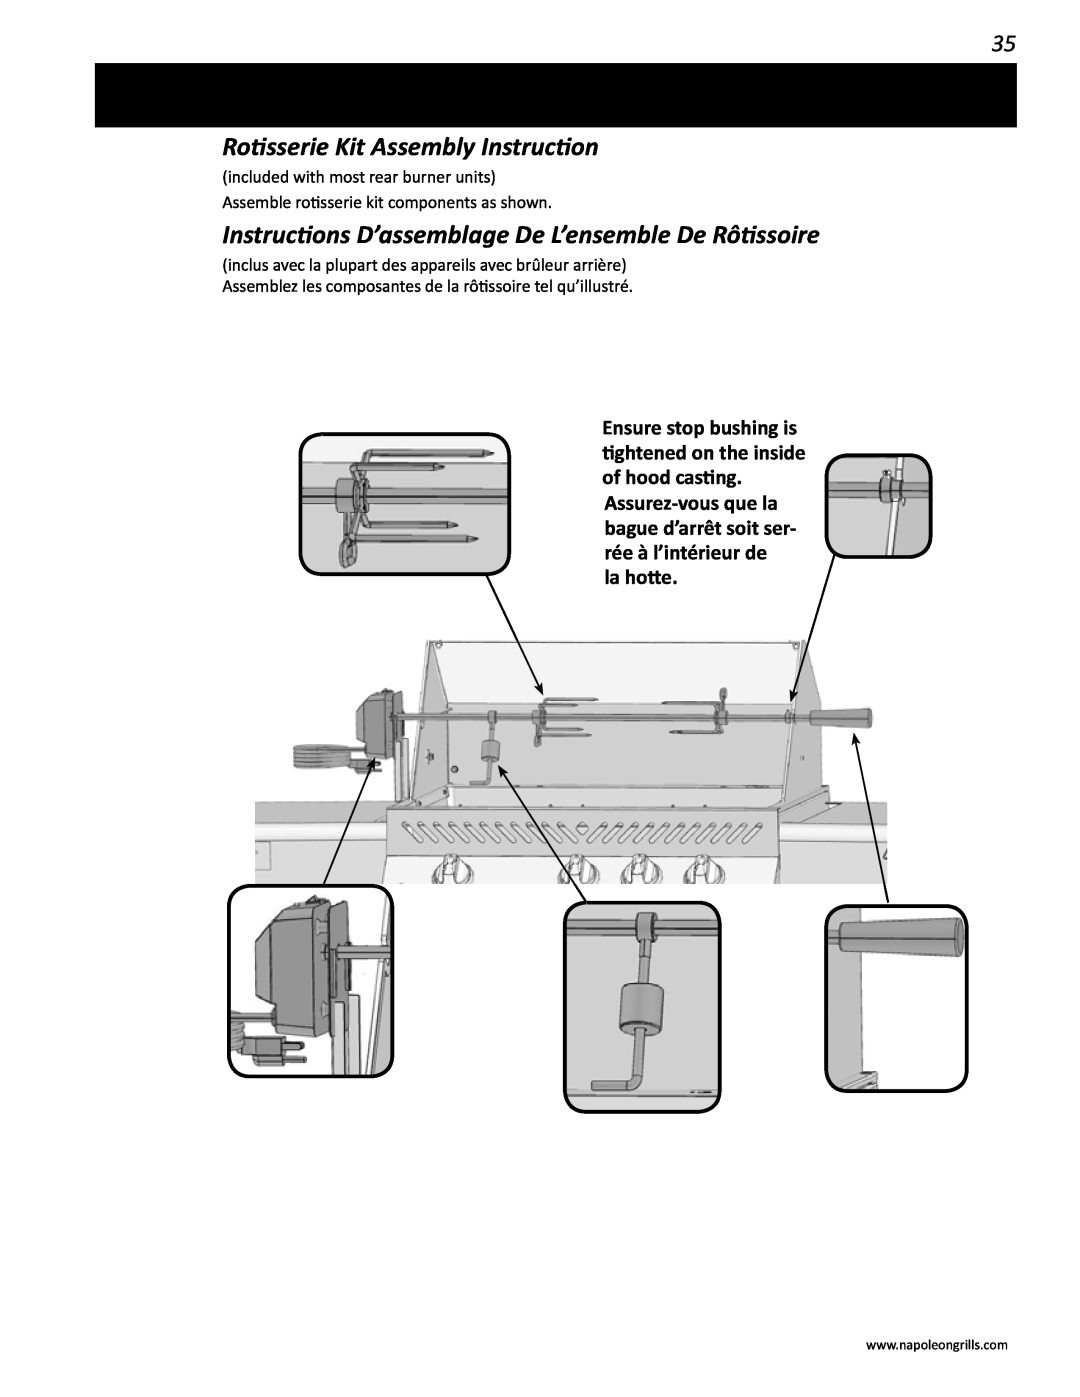 Napoleon Grills V 450, V 600 manual Rotisserie Kit Assembly Instruction 